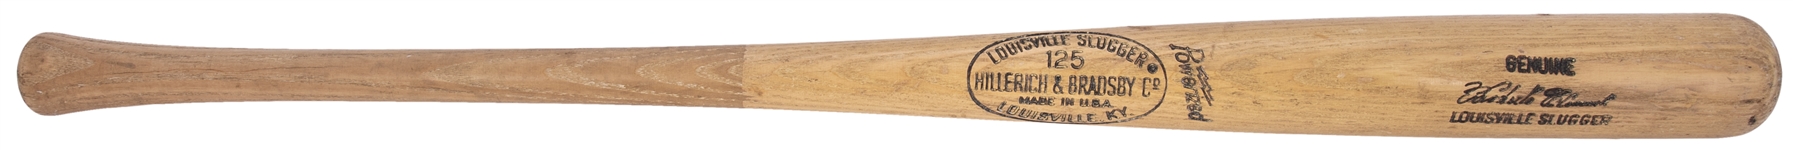 1971 Roberto Clemente Game Used World Series Hillerich & Bradsby U1 Model Bat (PSA/DNA GU 10 & Letter of Provenance)